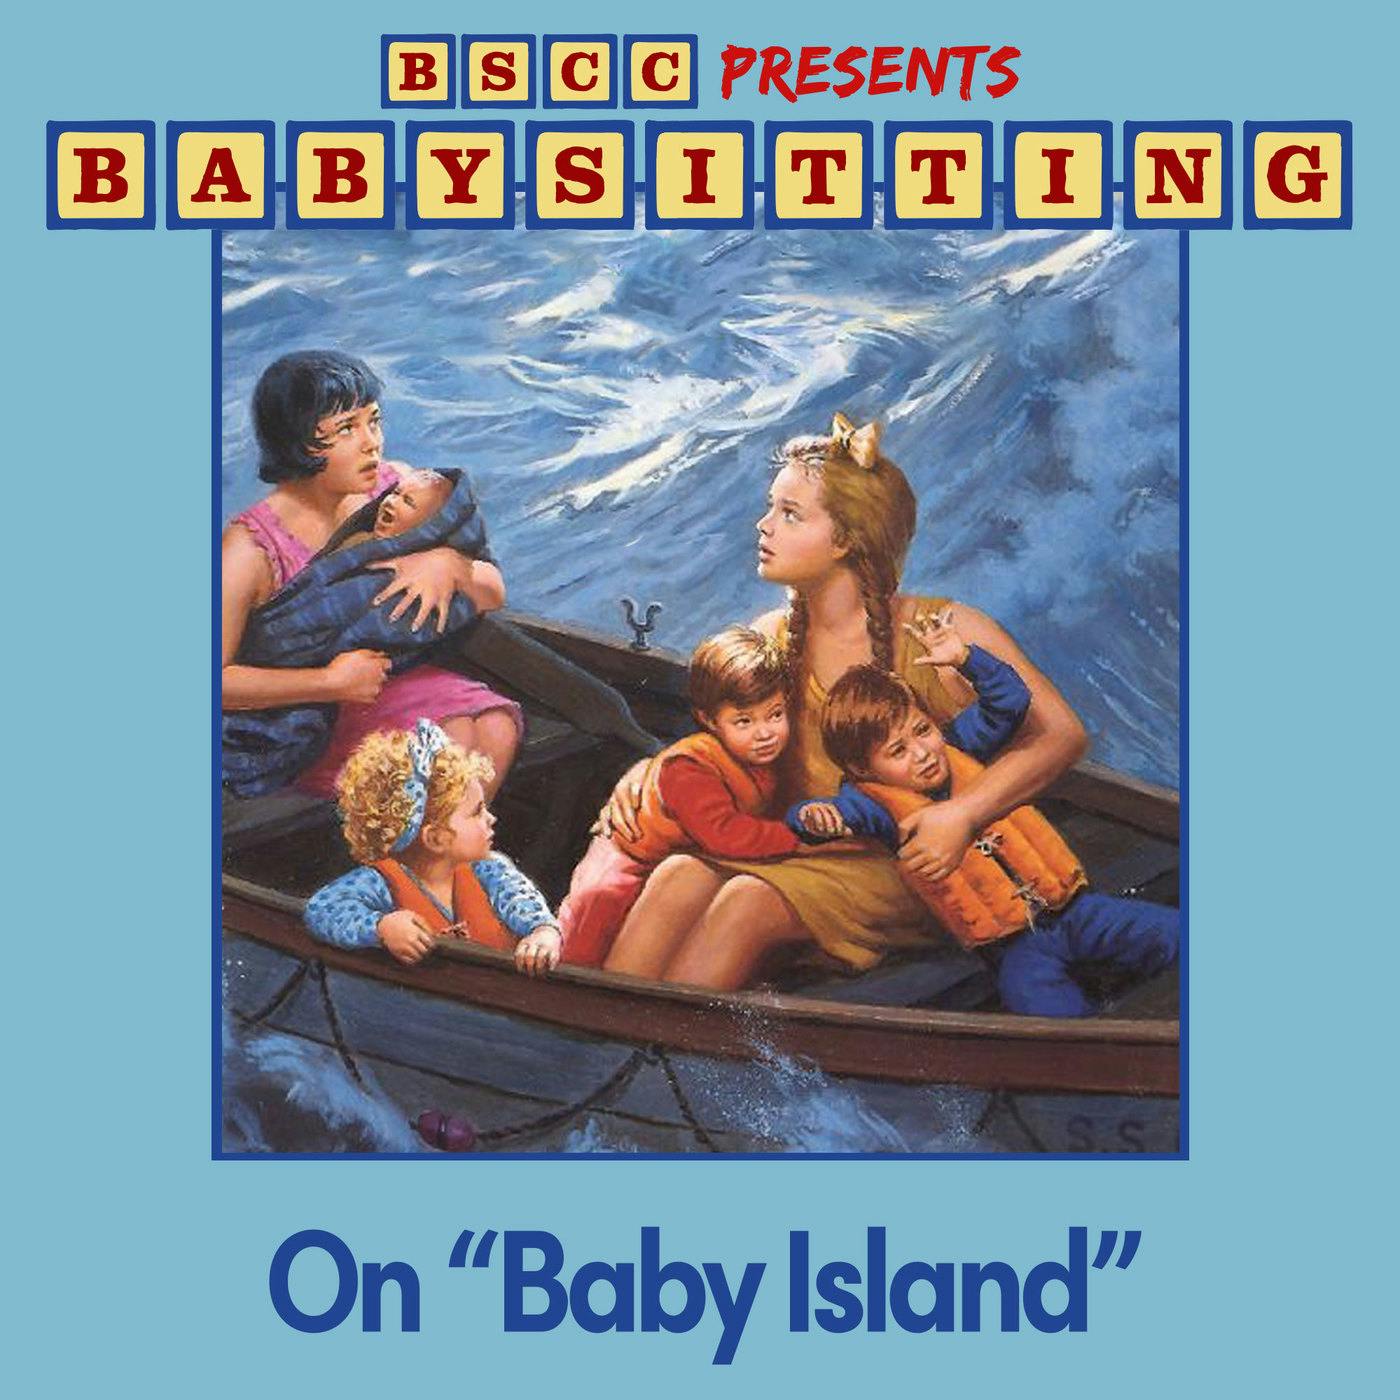 BSCC Presents: Babysitting on 